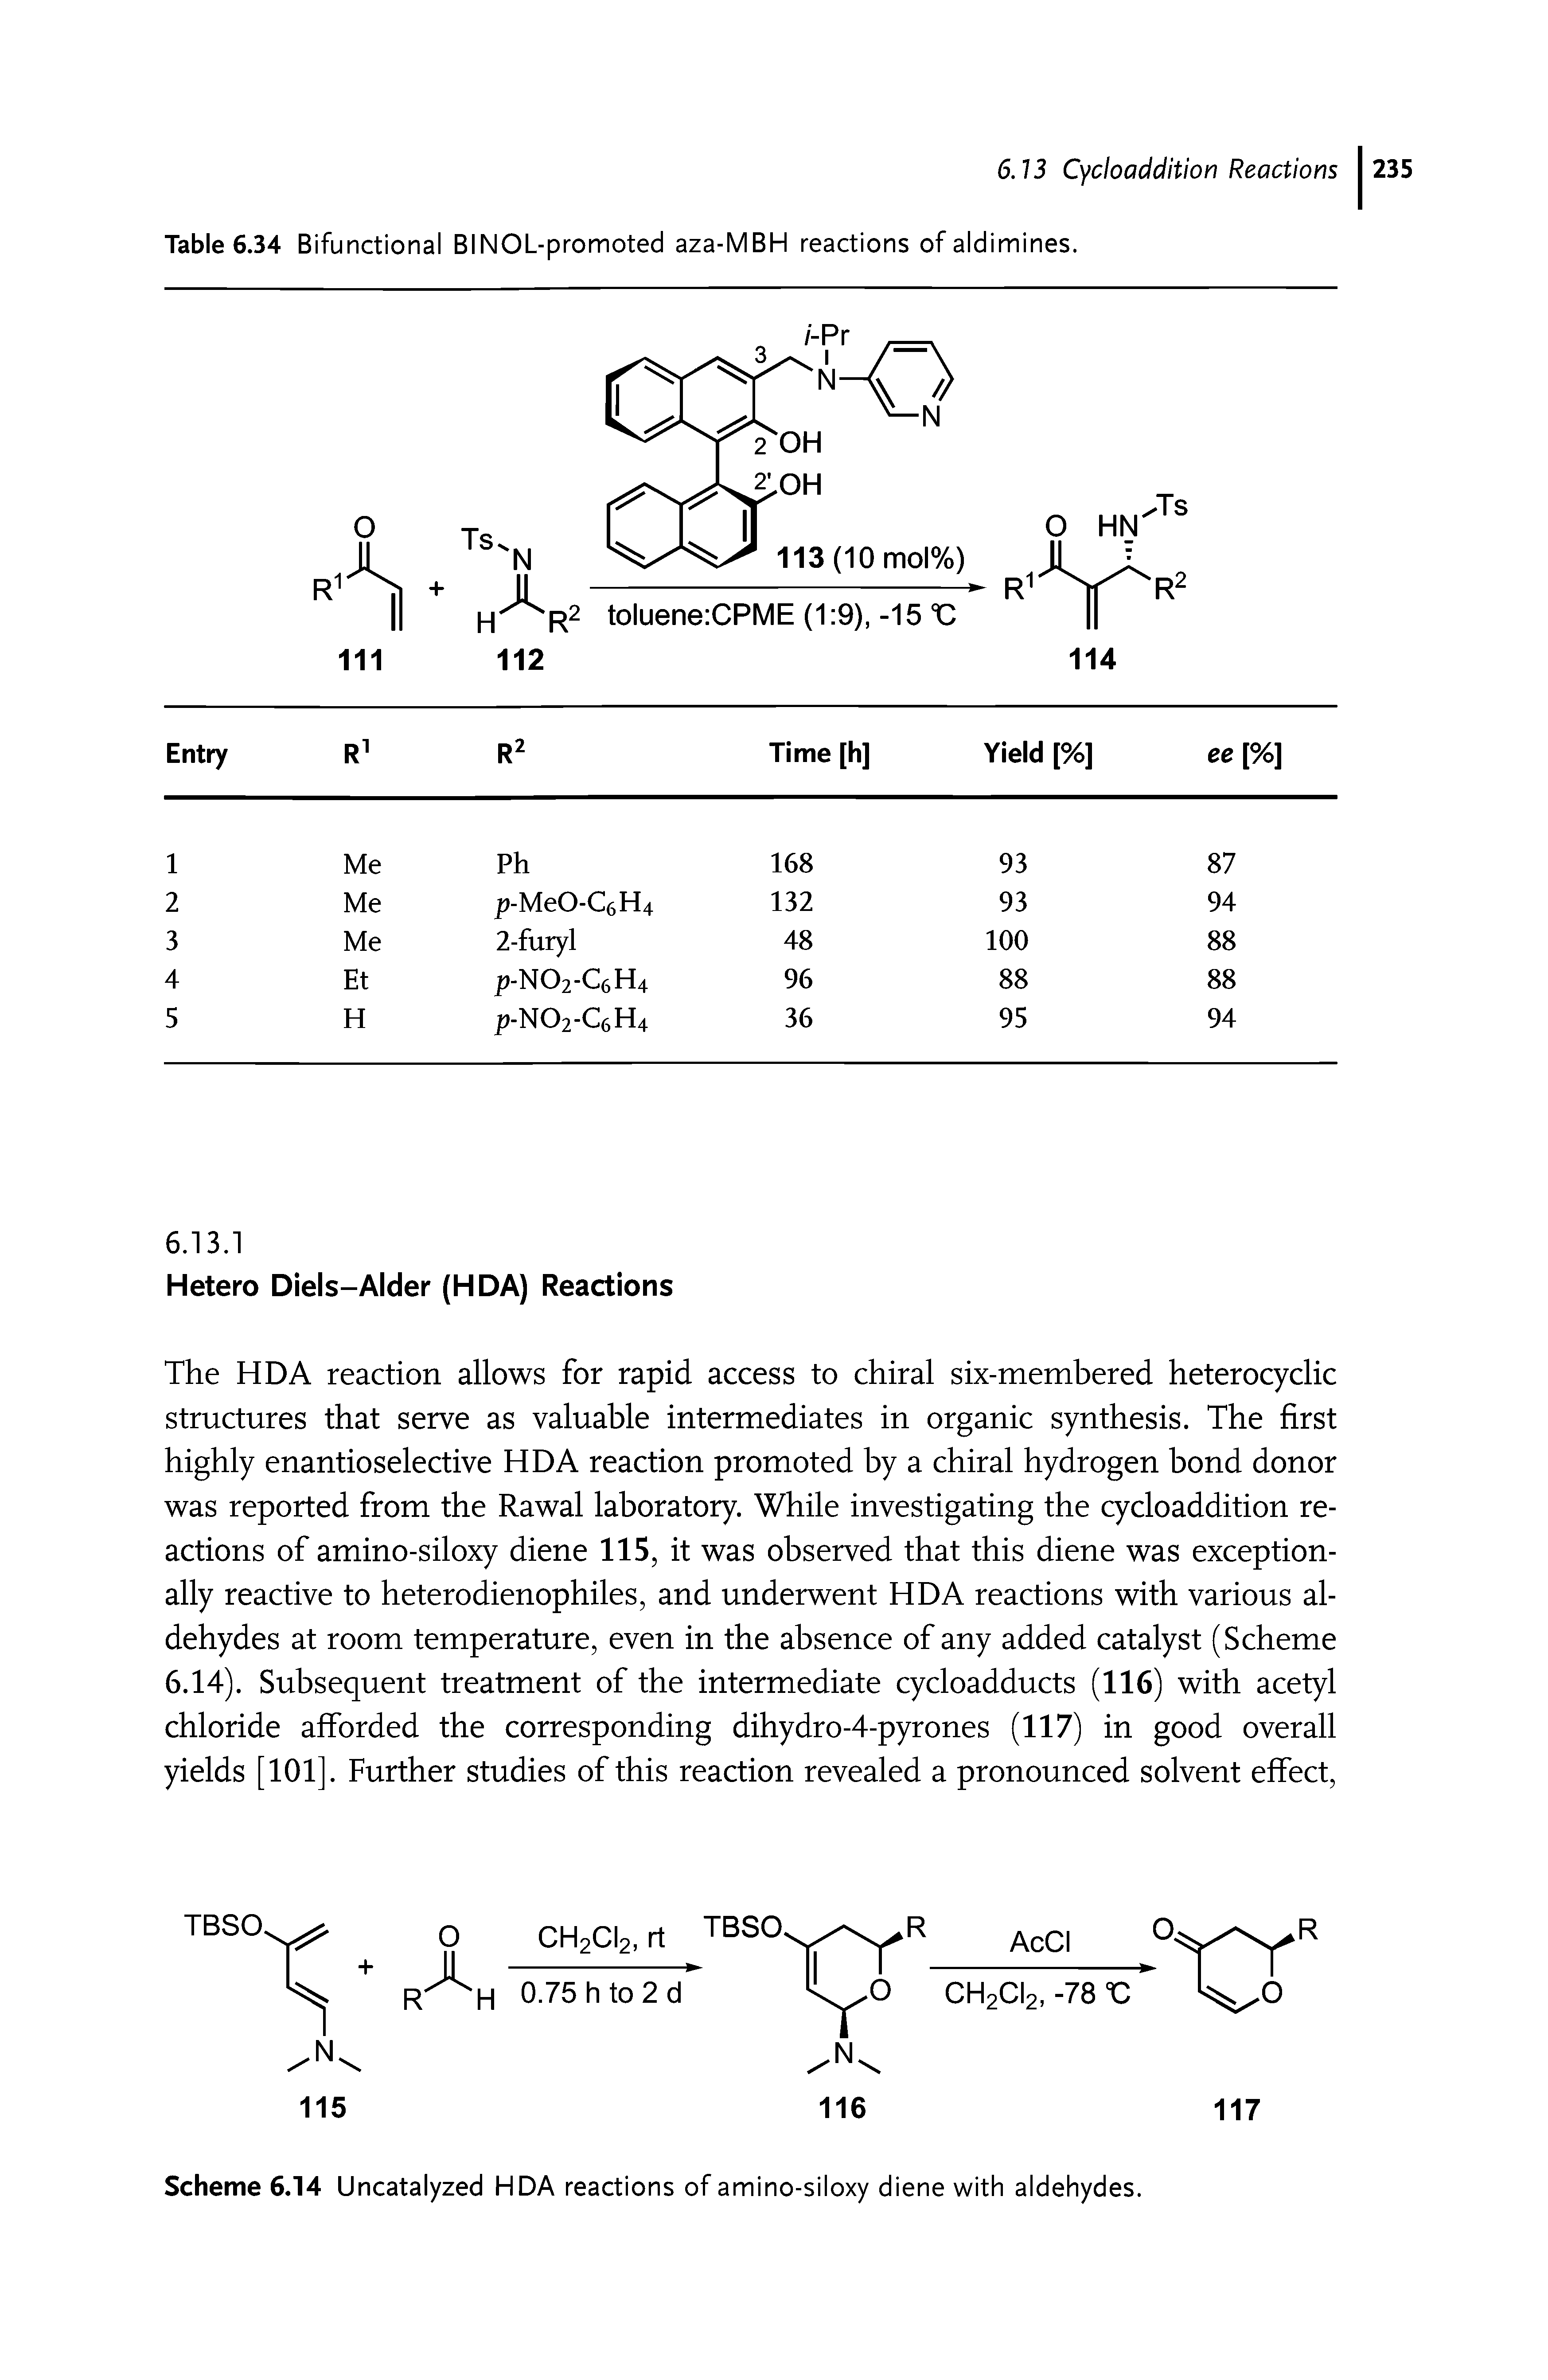 Scheme 6.14 Uncatalyzed HDA reactions of amino-siloxy diene with aldehydes.